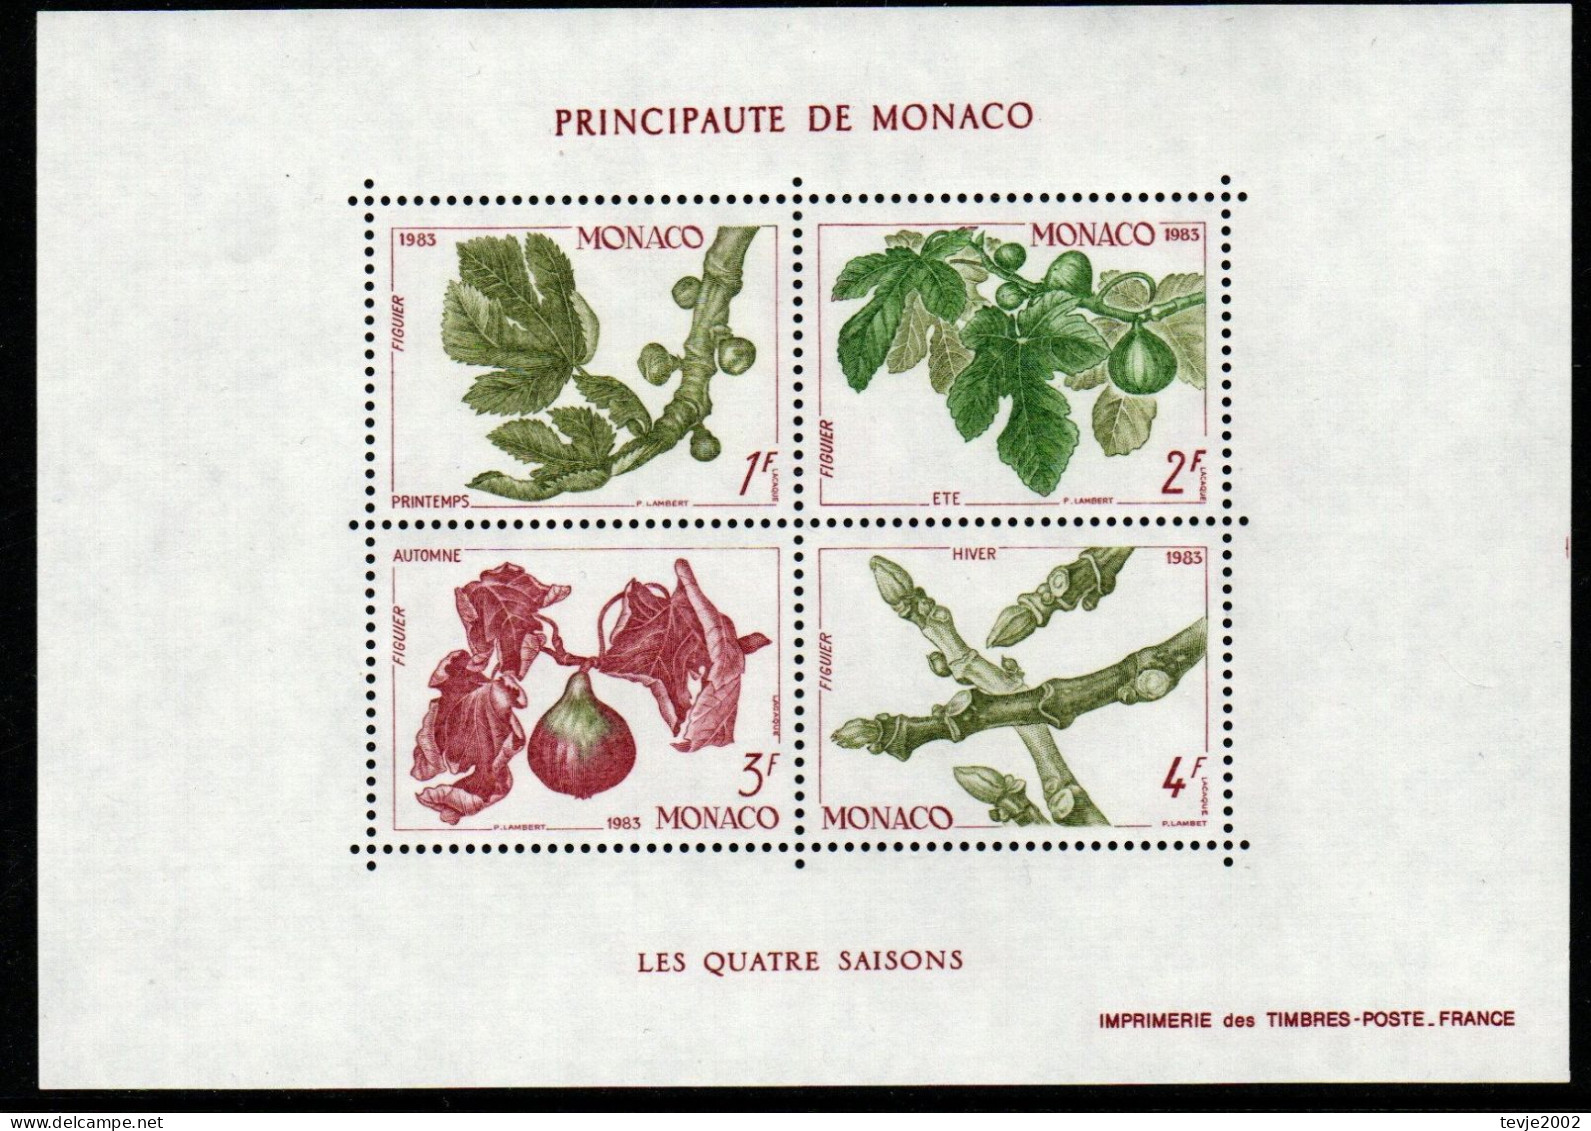 Monaco 1983 - Mi.Nr. Block 24 - Postfrisch MNH - Bäume Trees Feigen Früchte Fruits - Trees